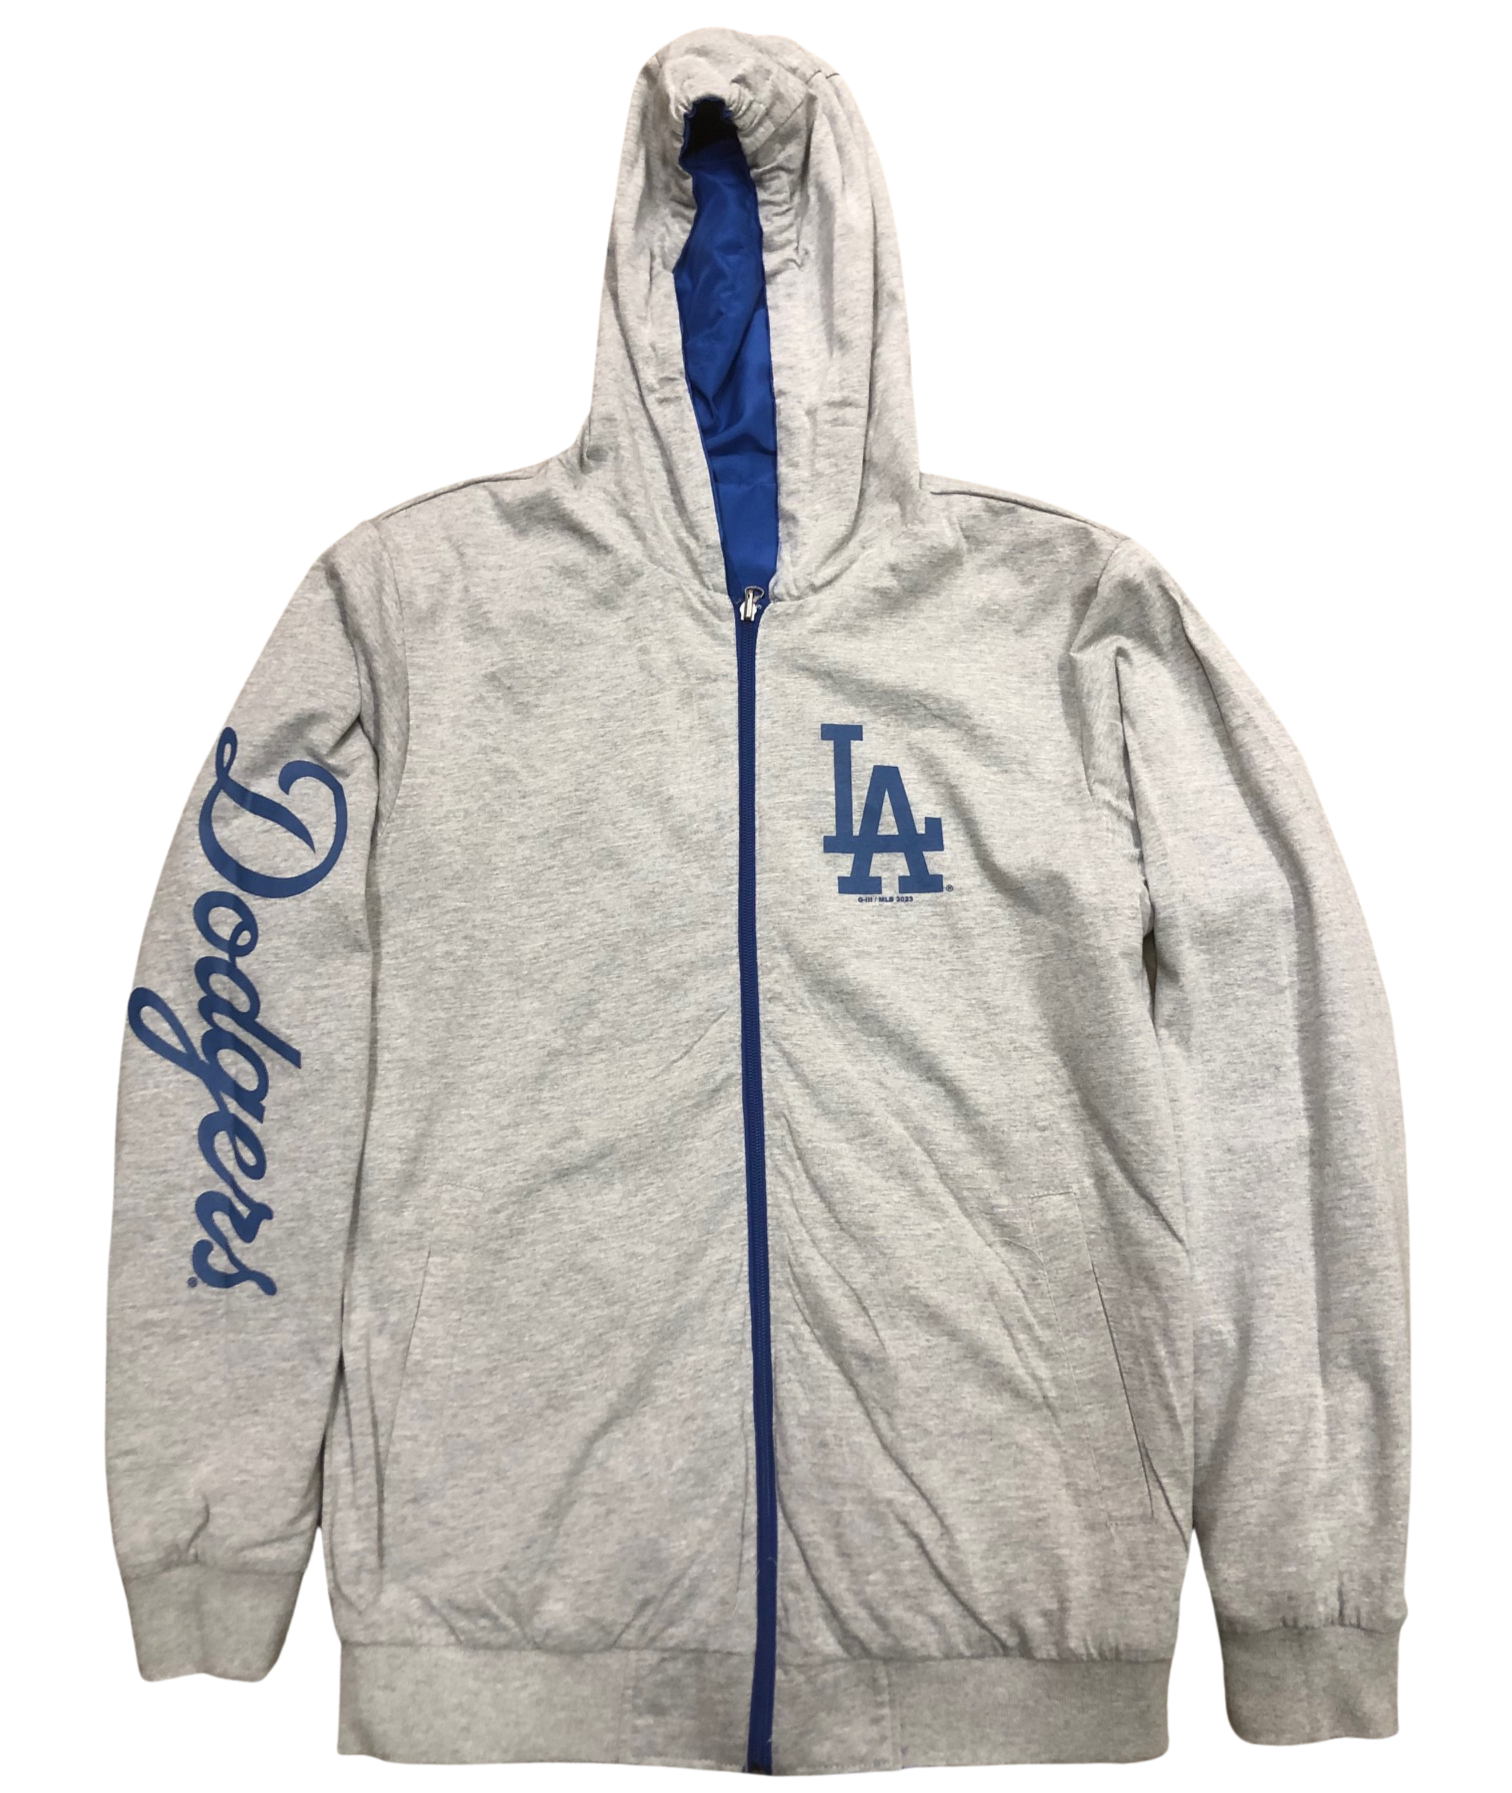 G-III Los Angeles Dodgers world Series Champions Reversible Jacket - Blue